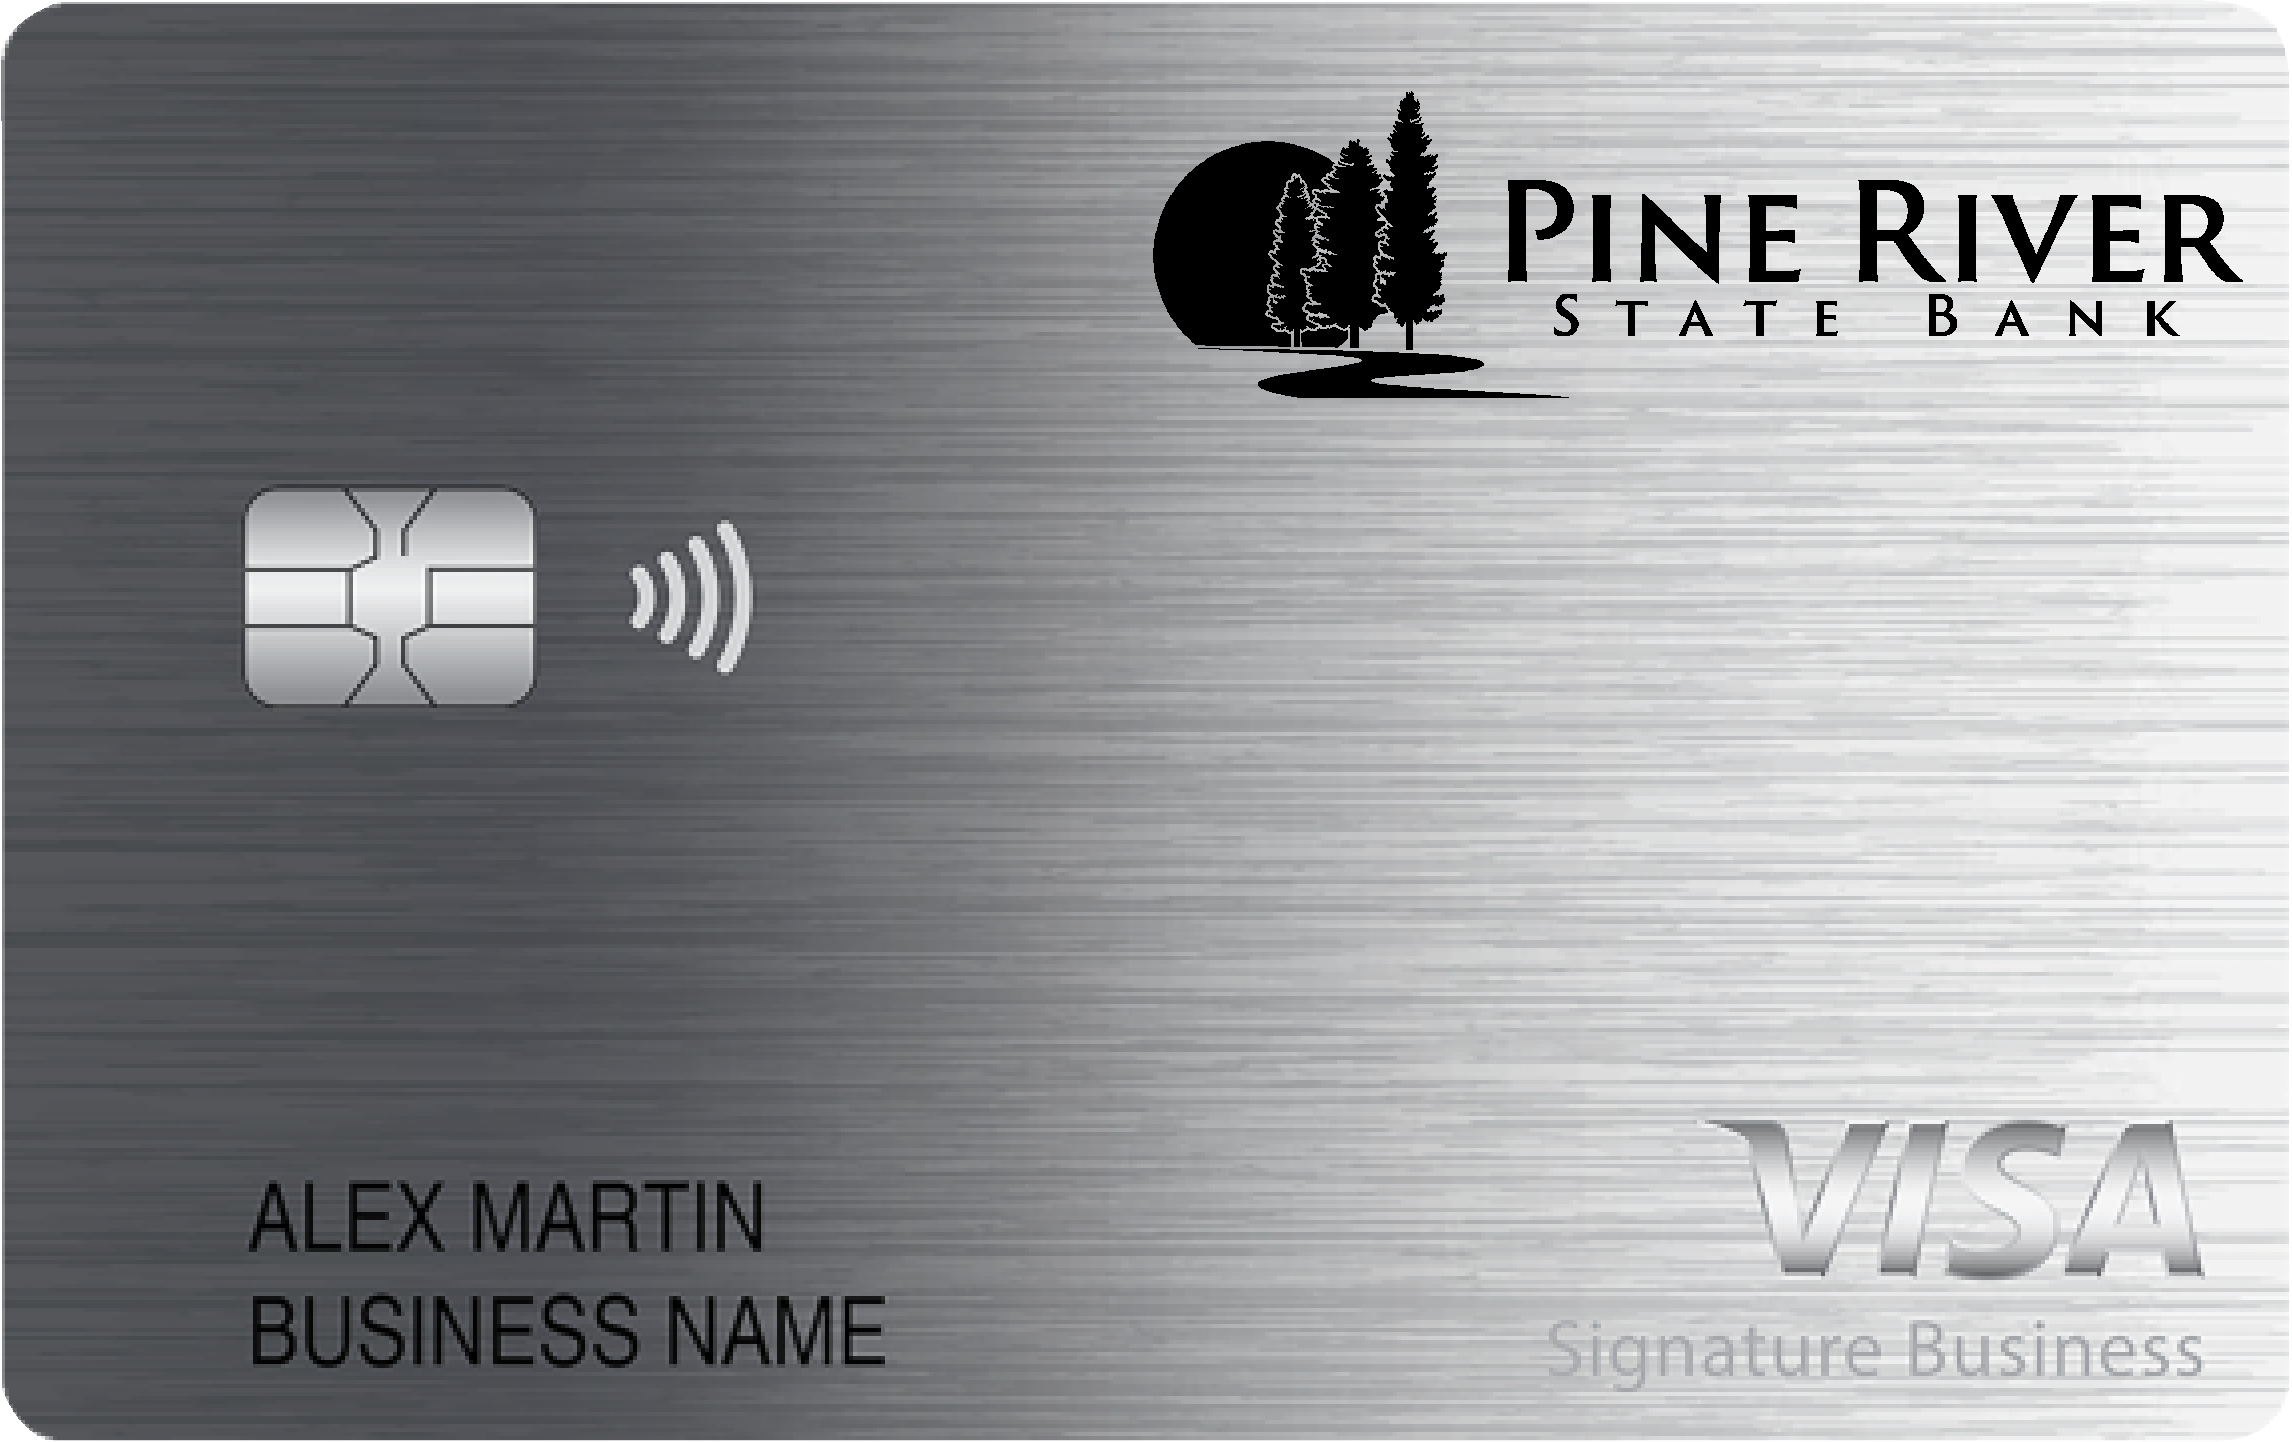 Pine River State Bank Smart Business Rewards Card